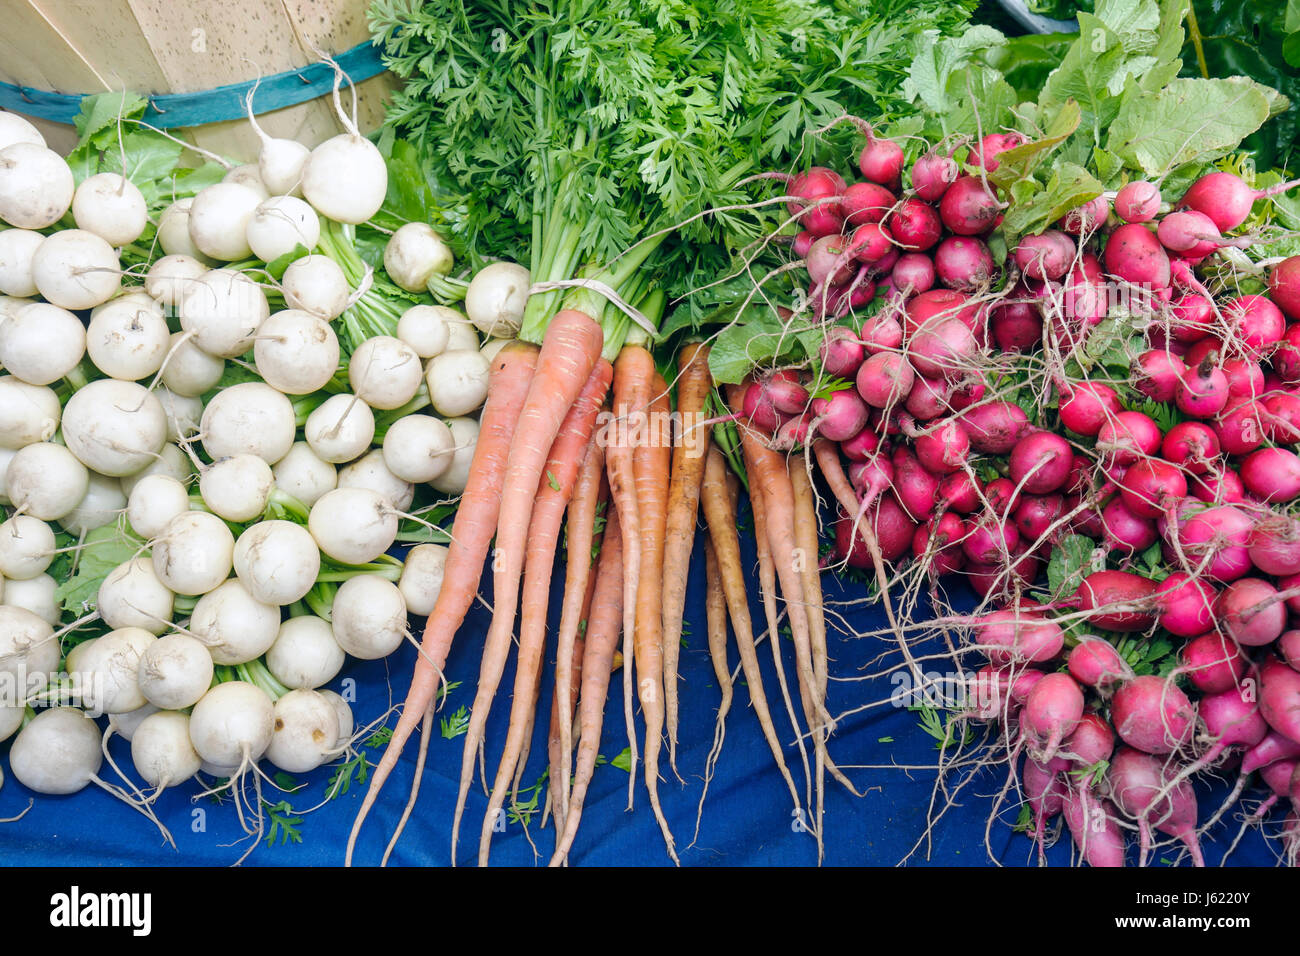 Charleston South Carolina,Marion Square,farmers market,communityactivity,fresh produce,local products,artisans,crafts,radish,carrot,root vegetables,bu Stock Photo